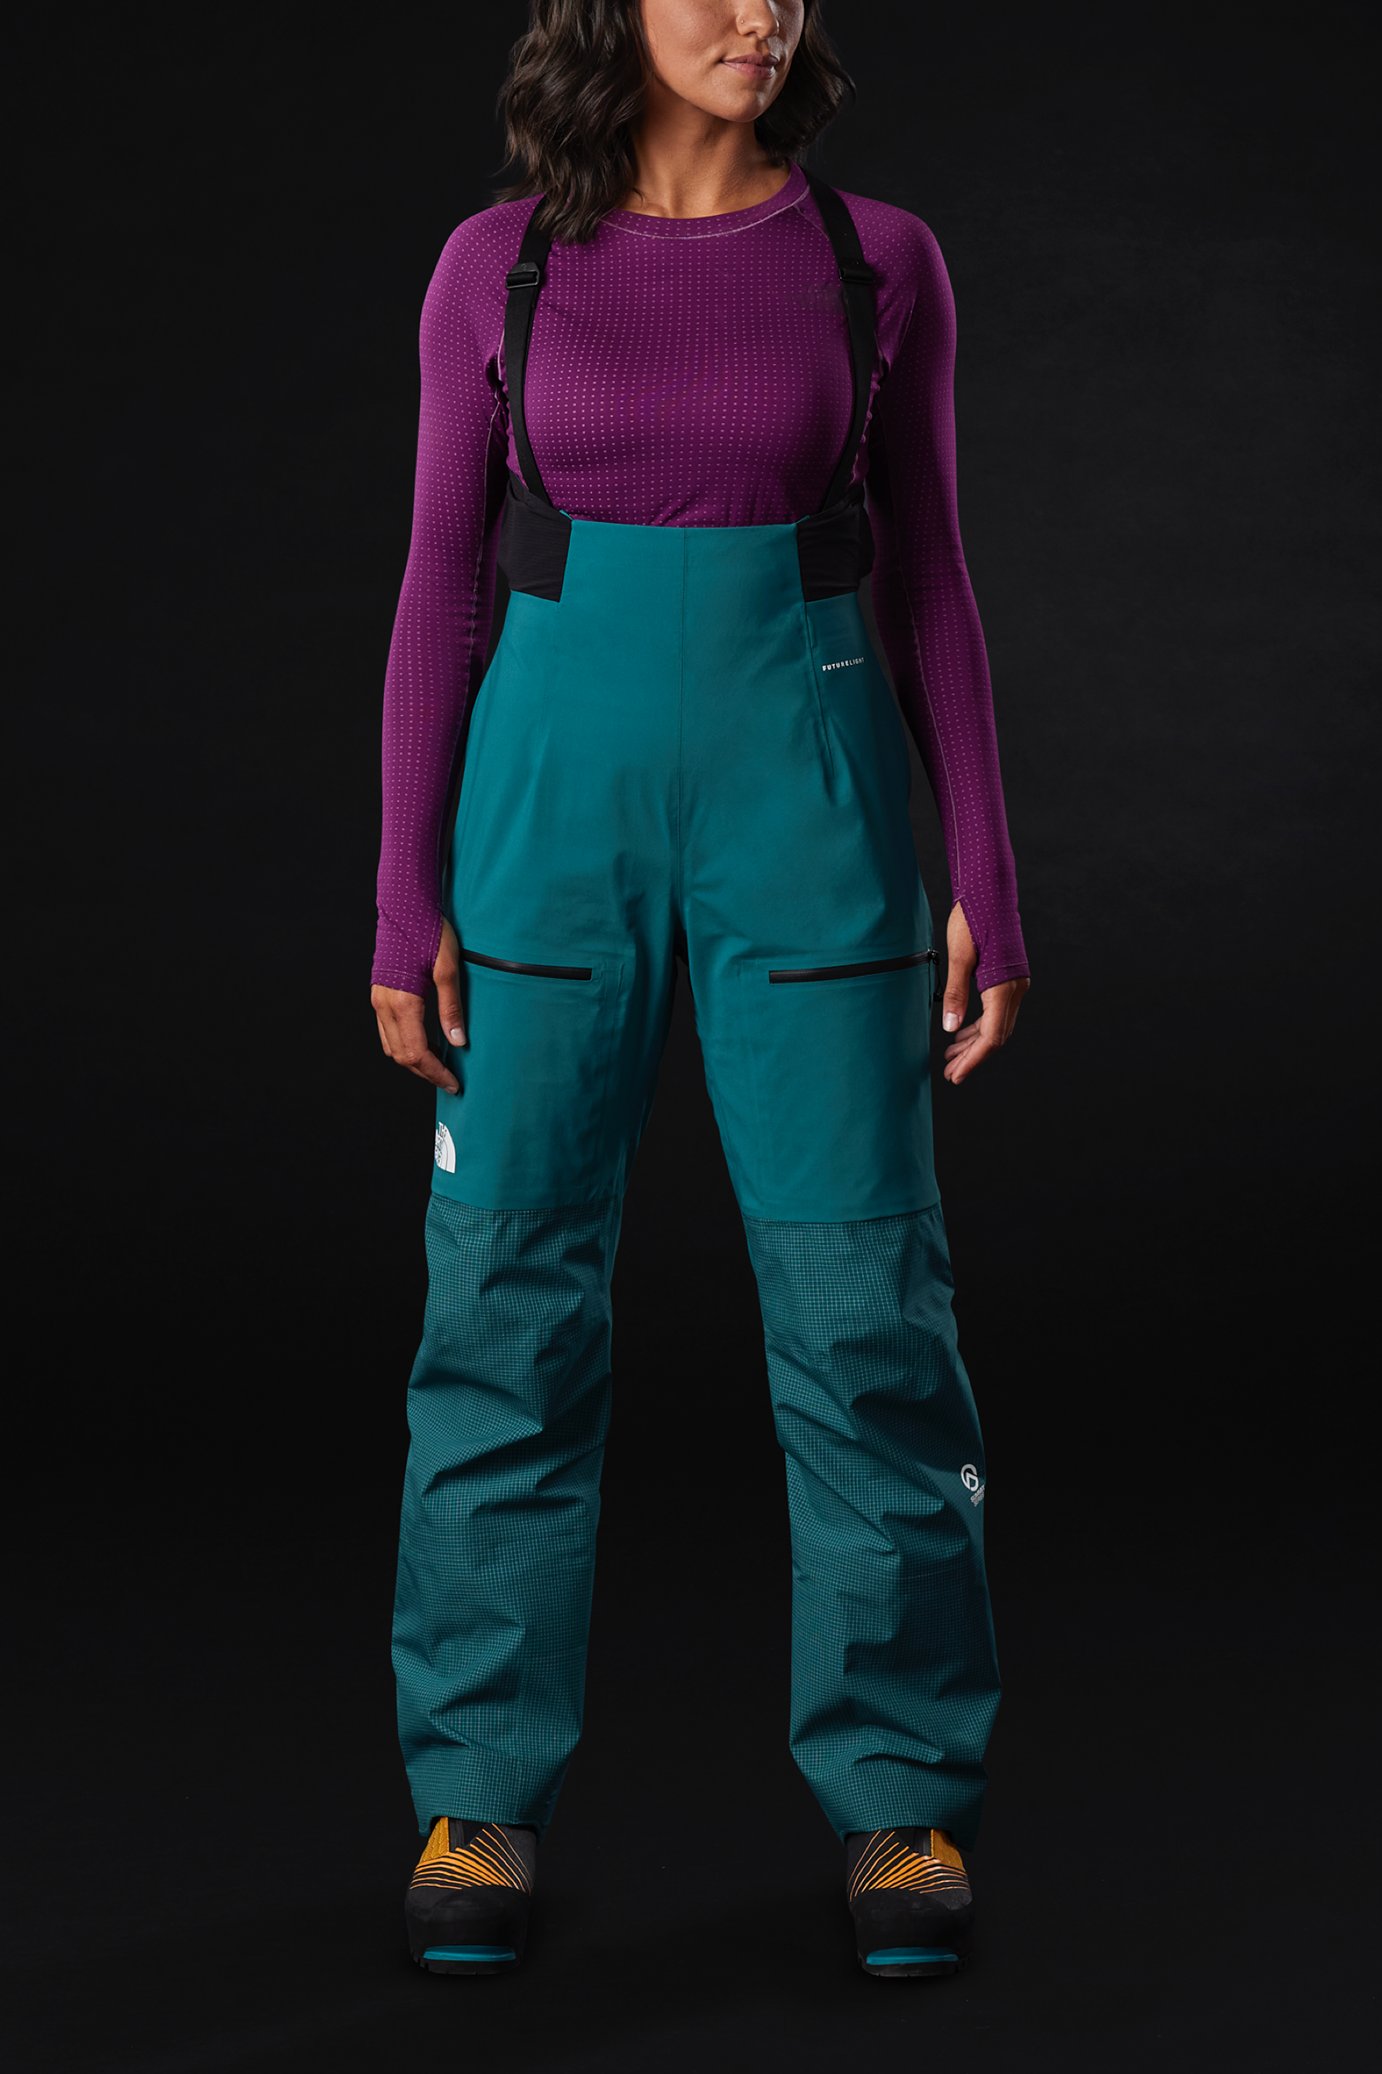 A person wears the Summit L5 FUTURELIGHT Full Zip Bib. A bib with an ergonomic and form-fitting design.